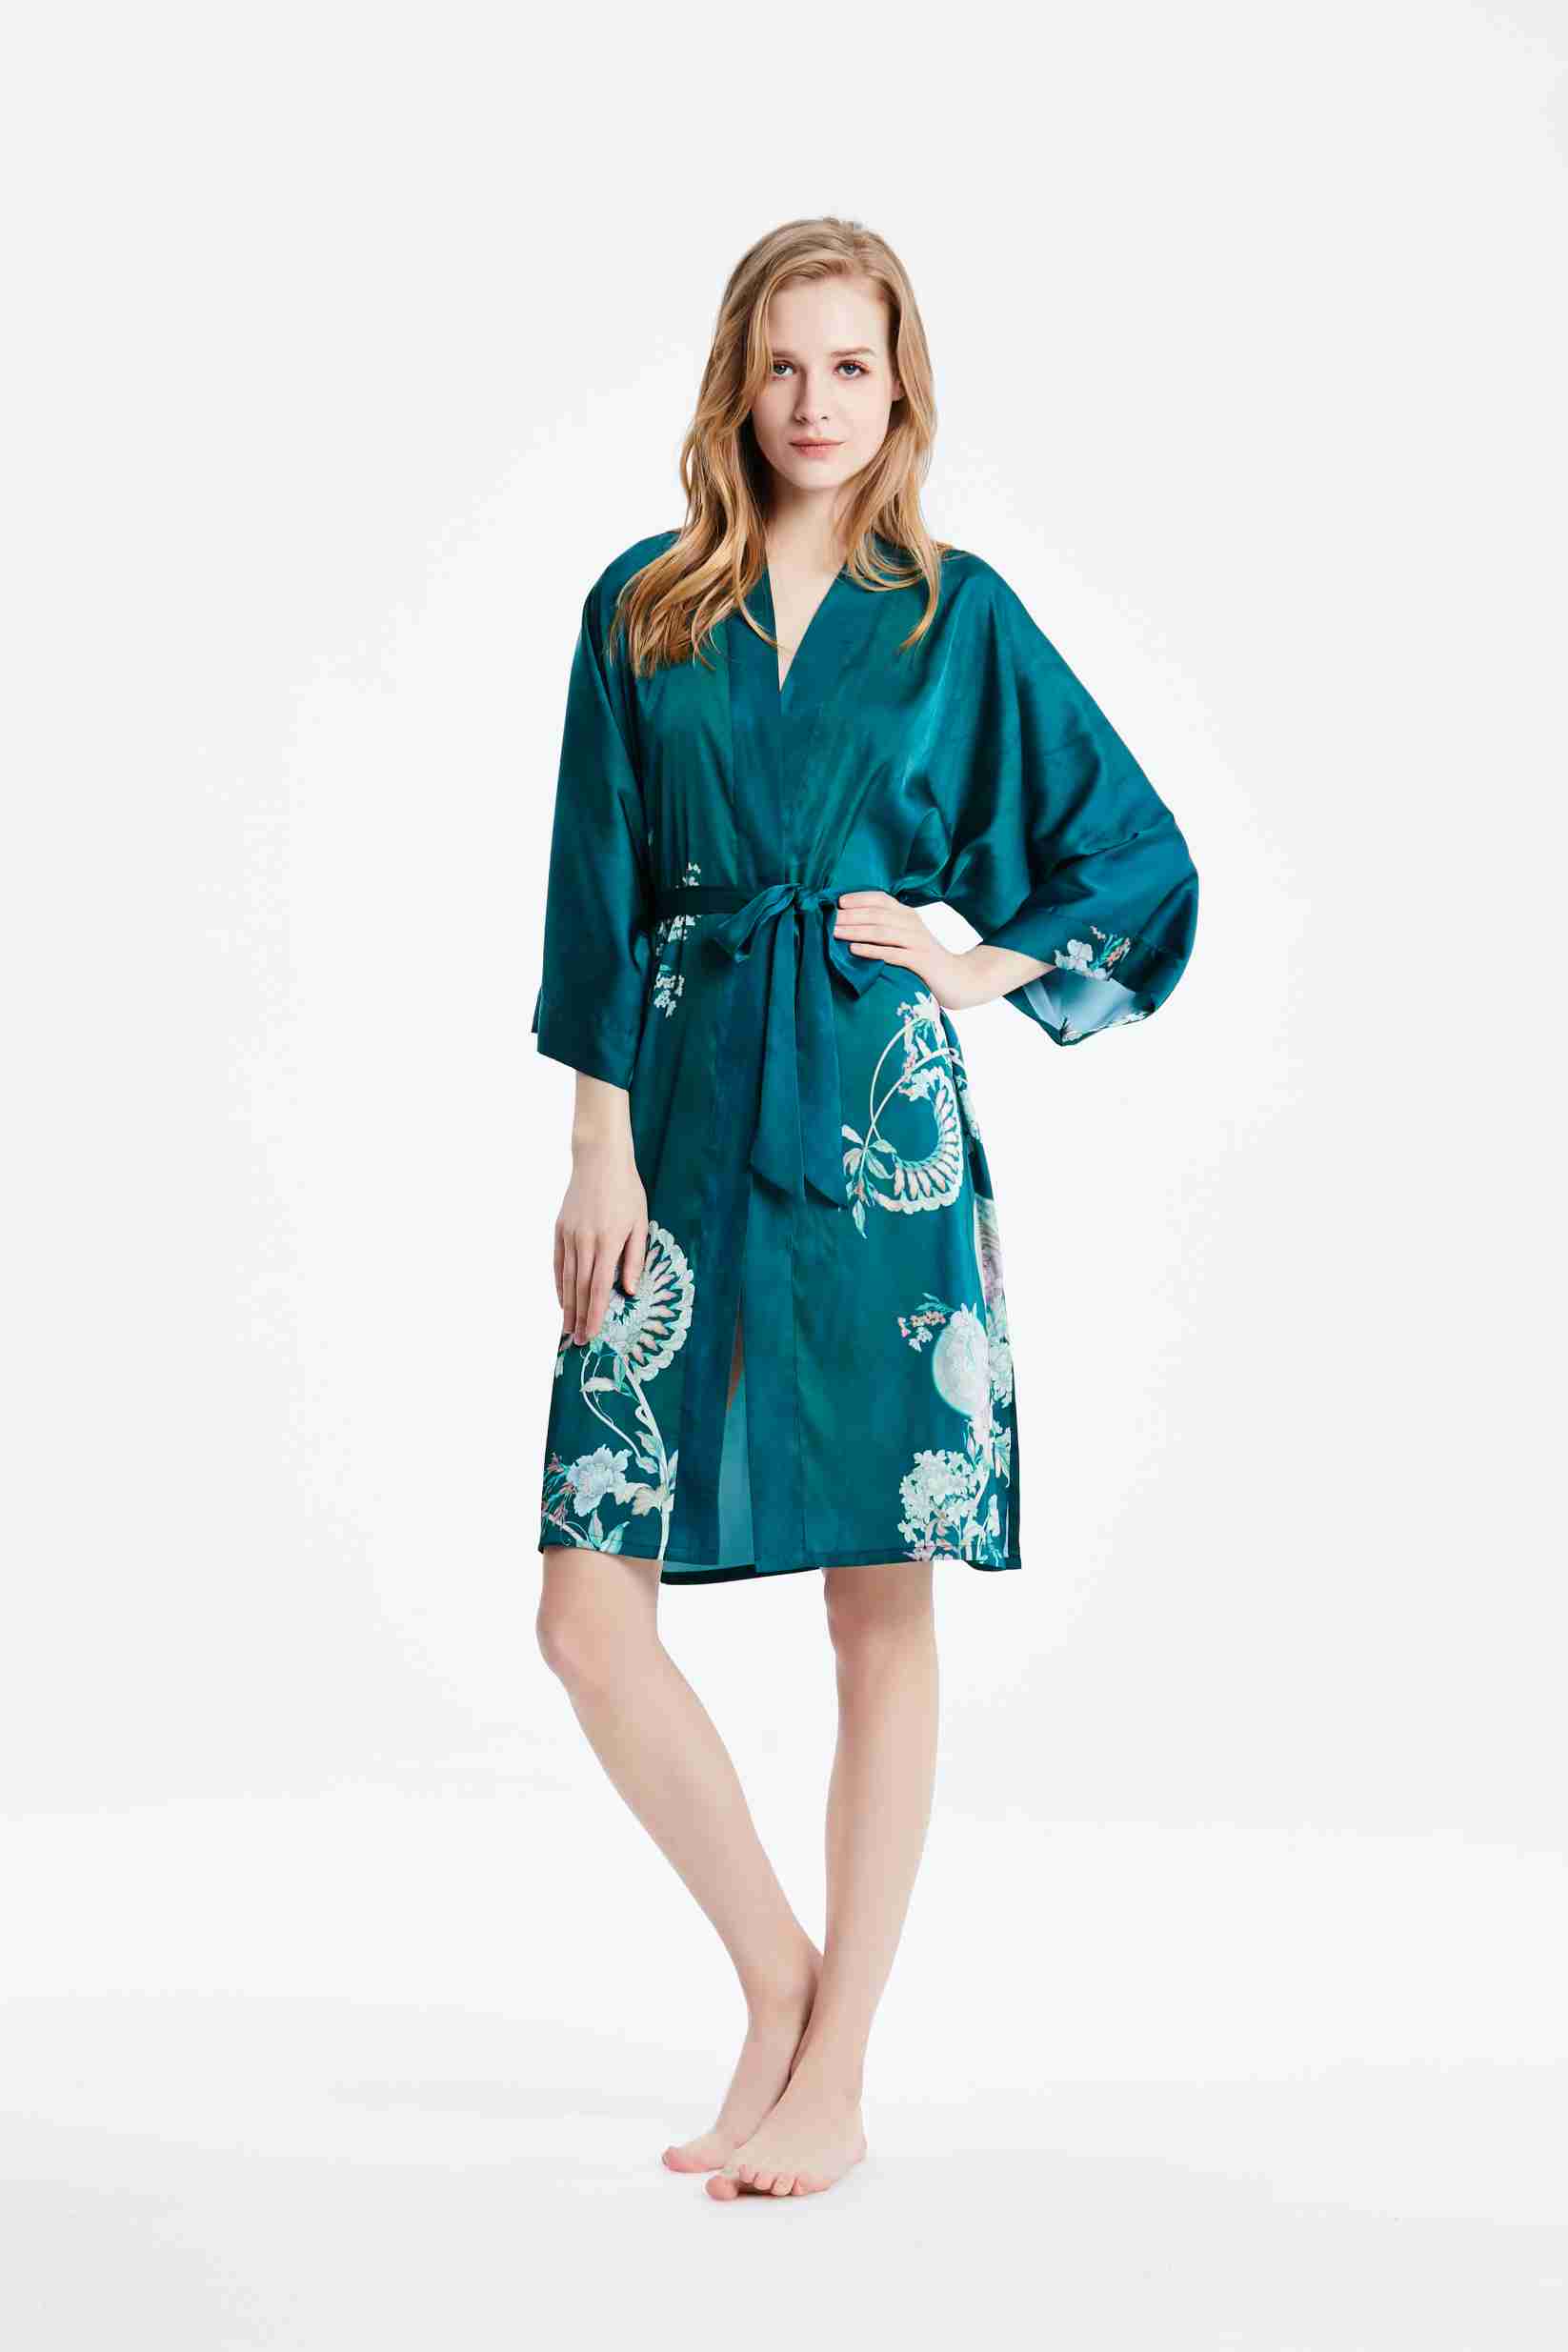 Best Ladies Luxury Satin Silk Kimono Short Bathrobe Nightgown with 3/4 sleeve in Santa Green Floral Print Factory Wholesale